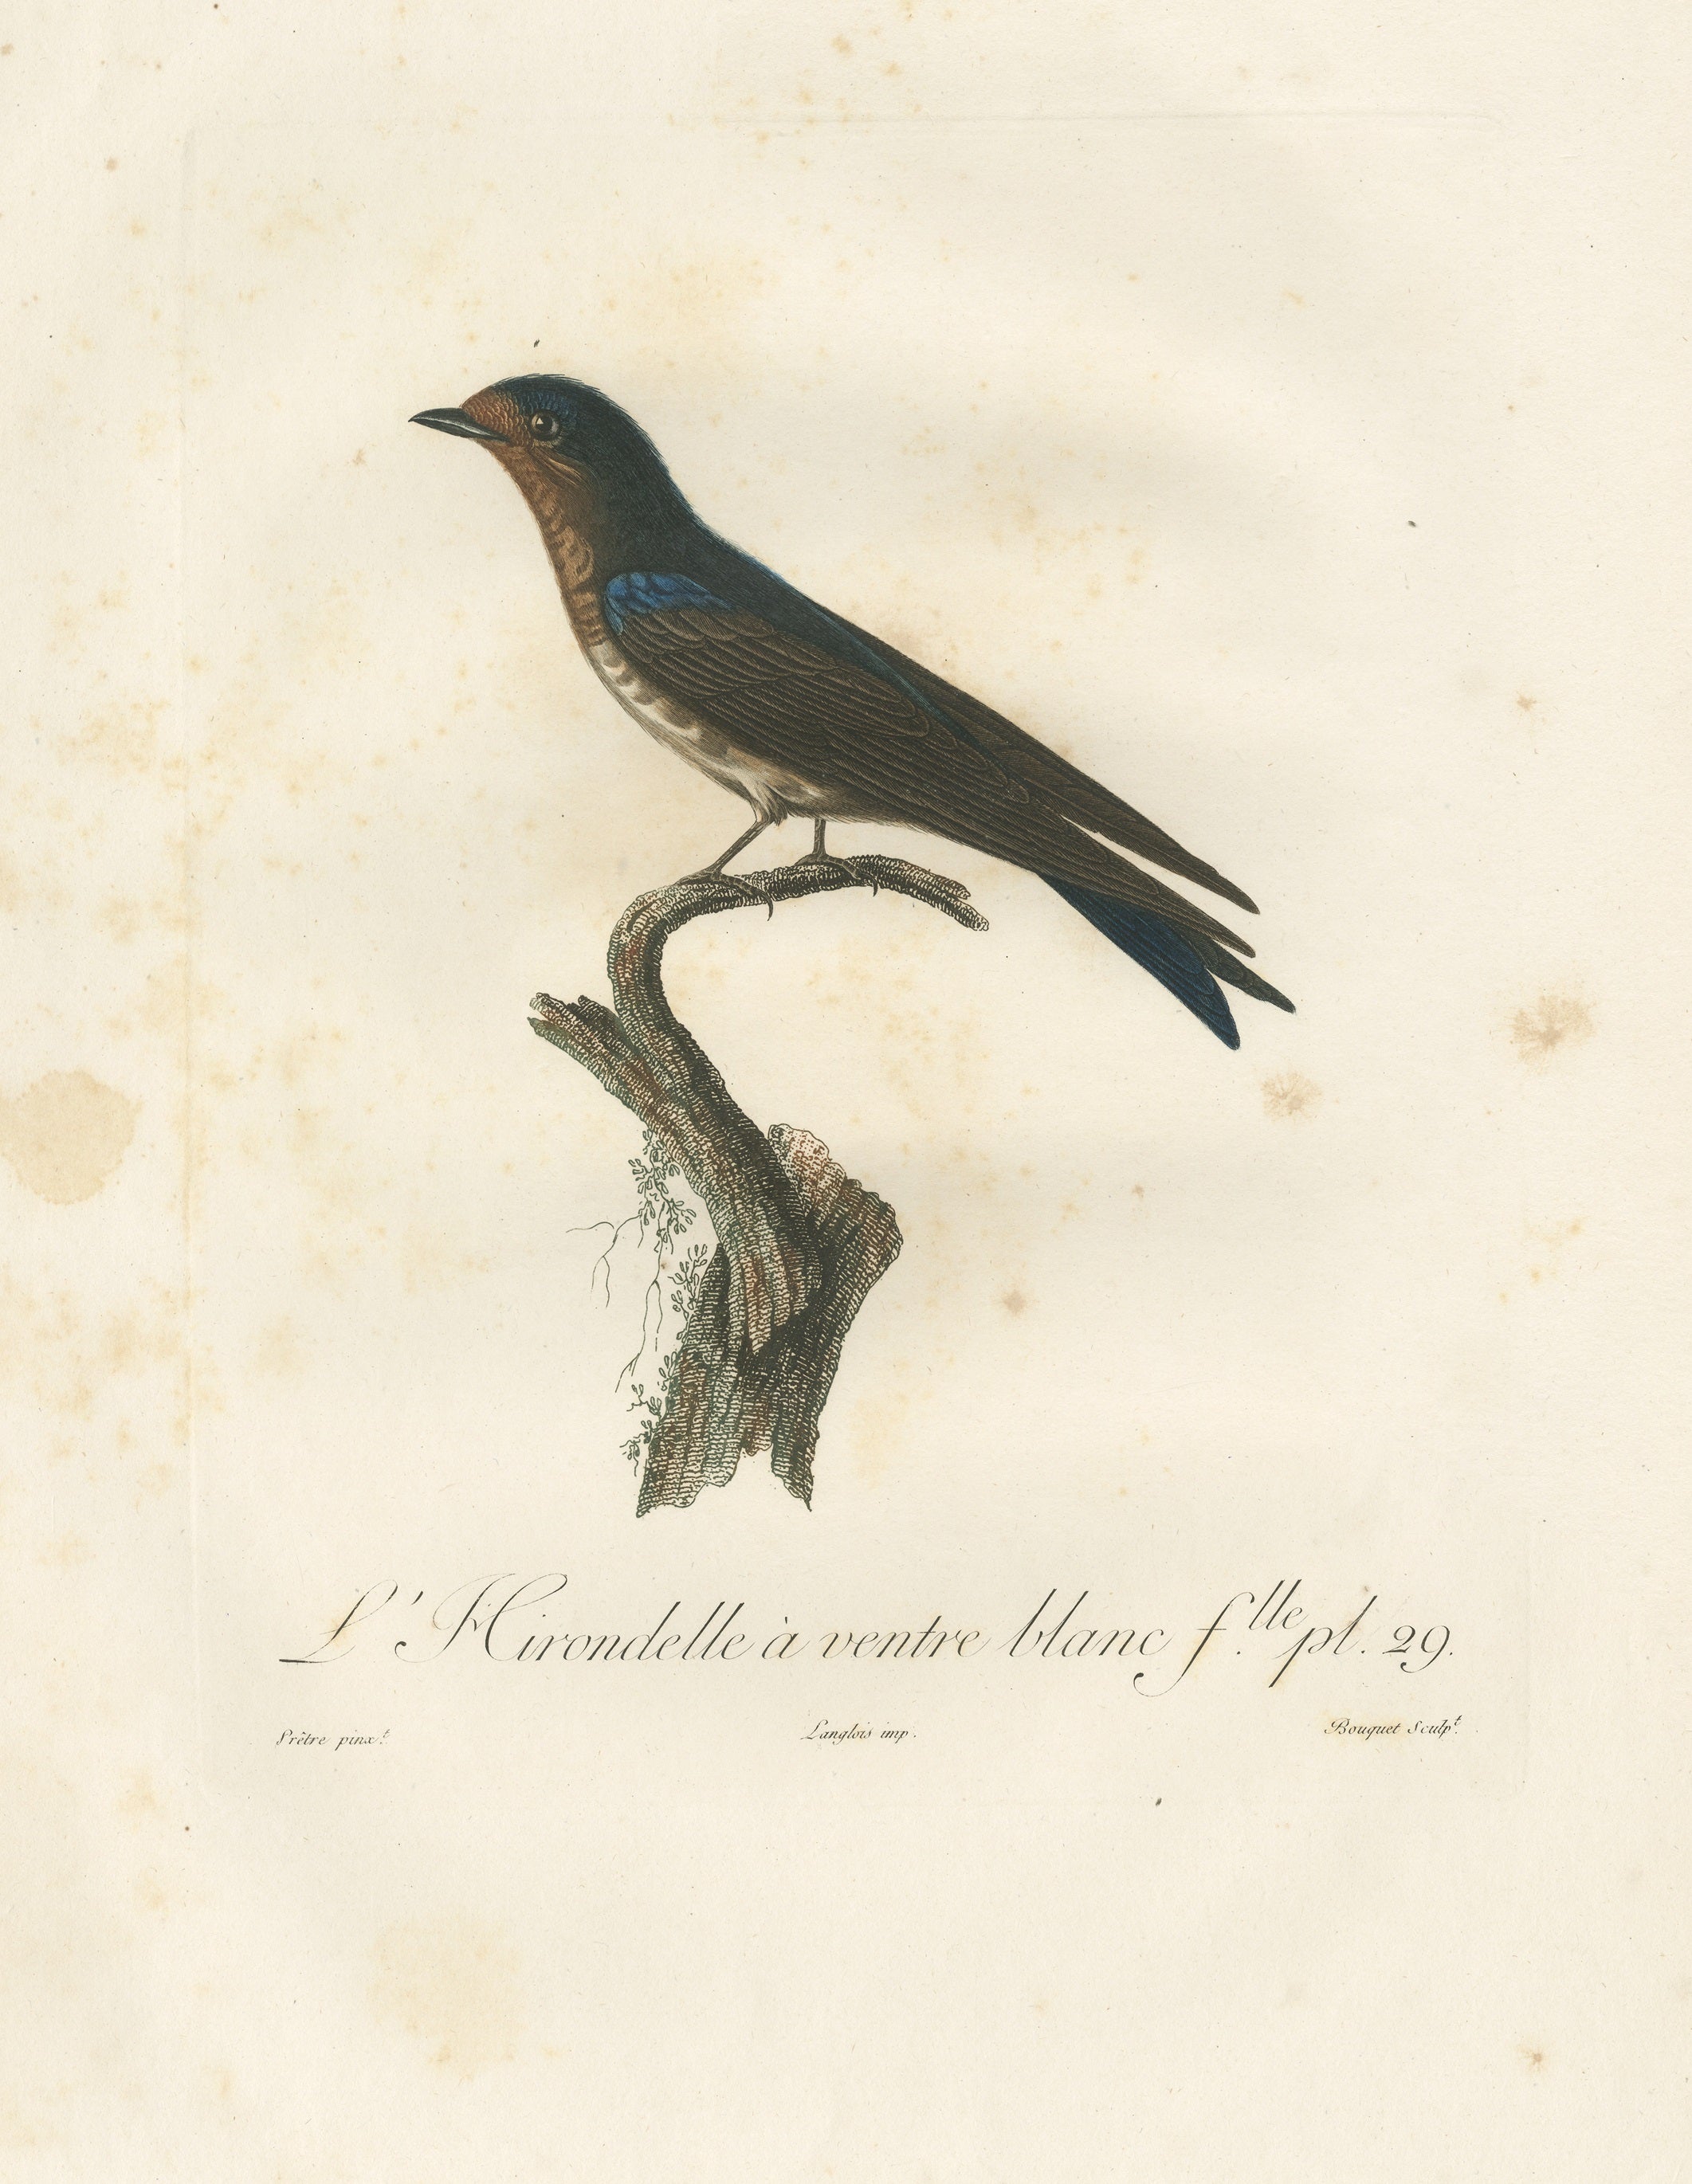 This striking antique bird print titled 